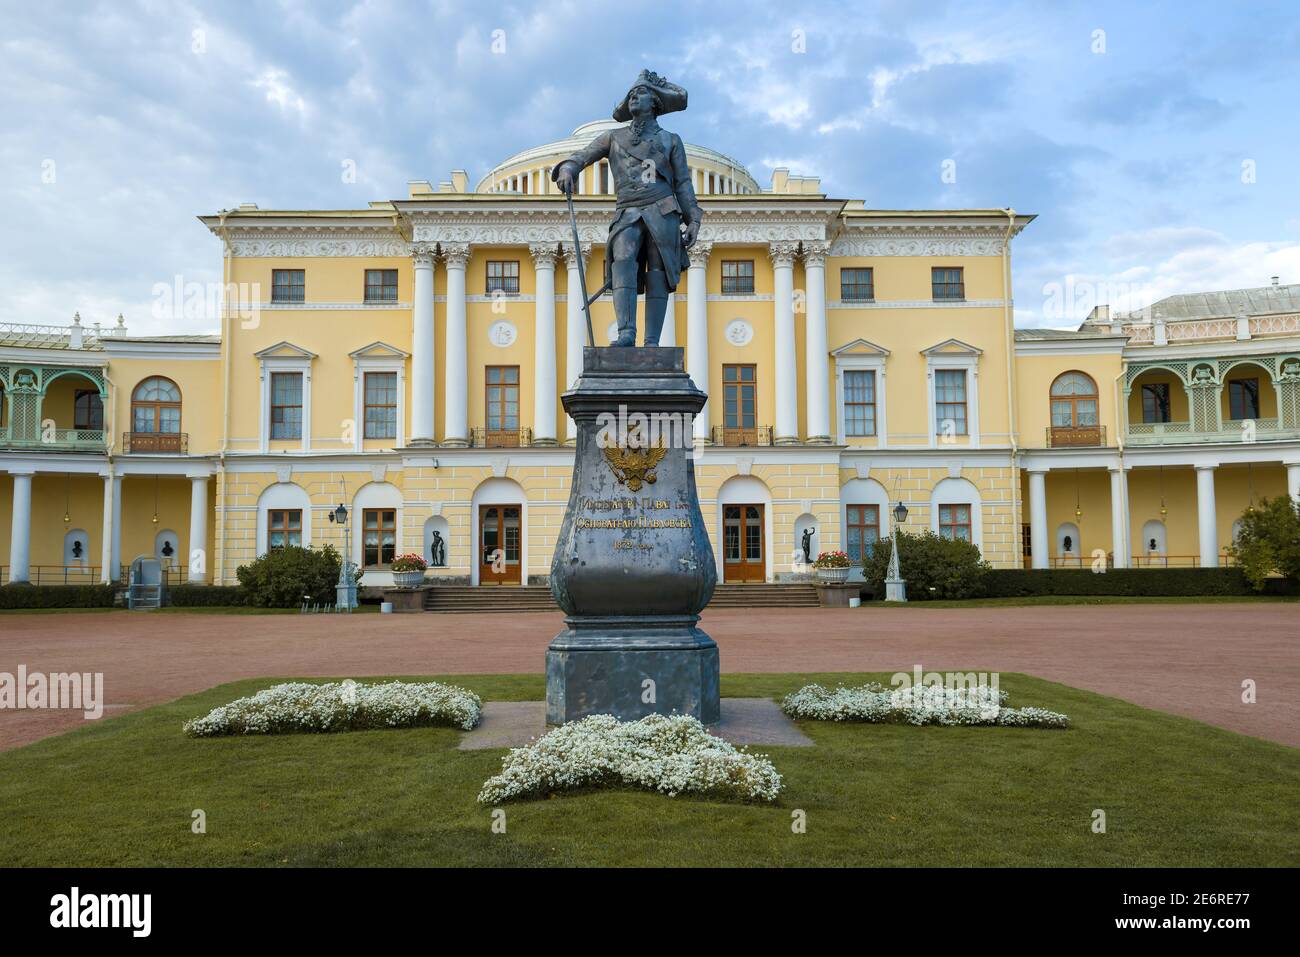 PAVLOVSK, RUSSIA - SEPTEMBER 28, 2020: Monument to Russian Emperor Paul I against the background of Pavlovsk Palace on September morning Stock Photo